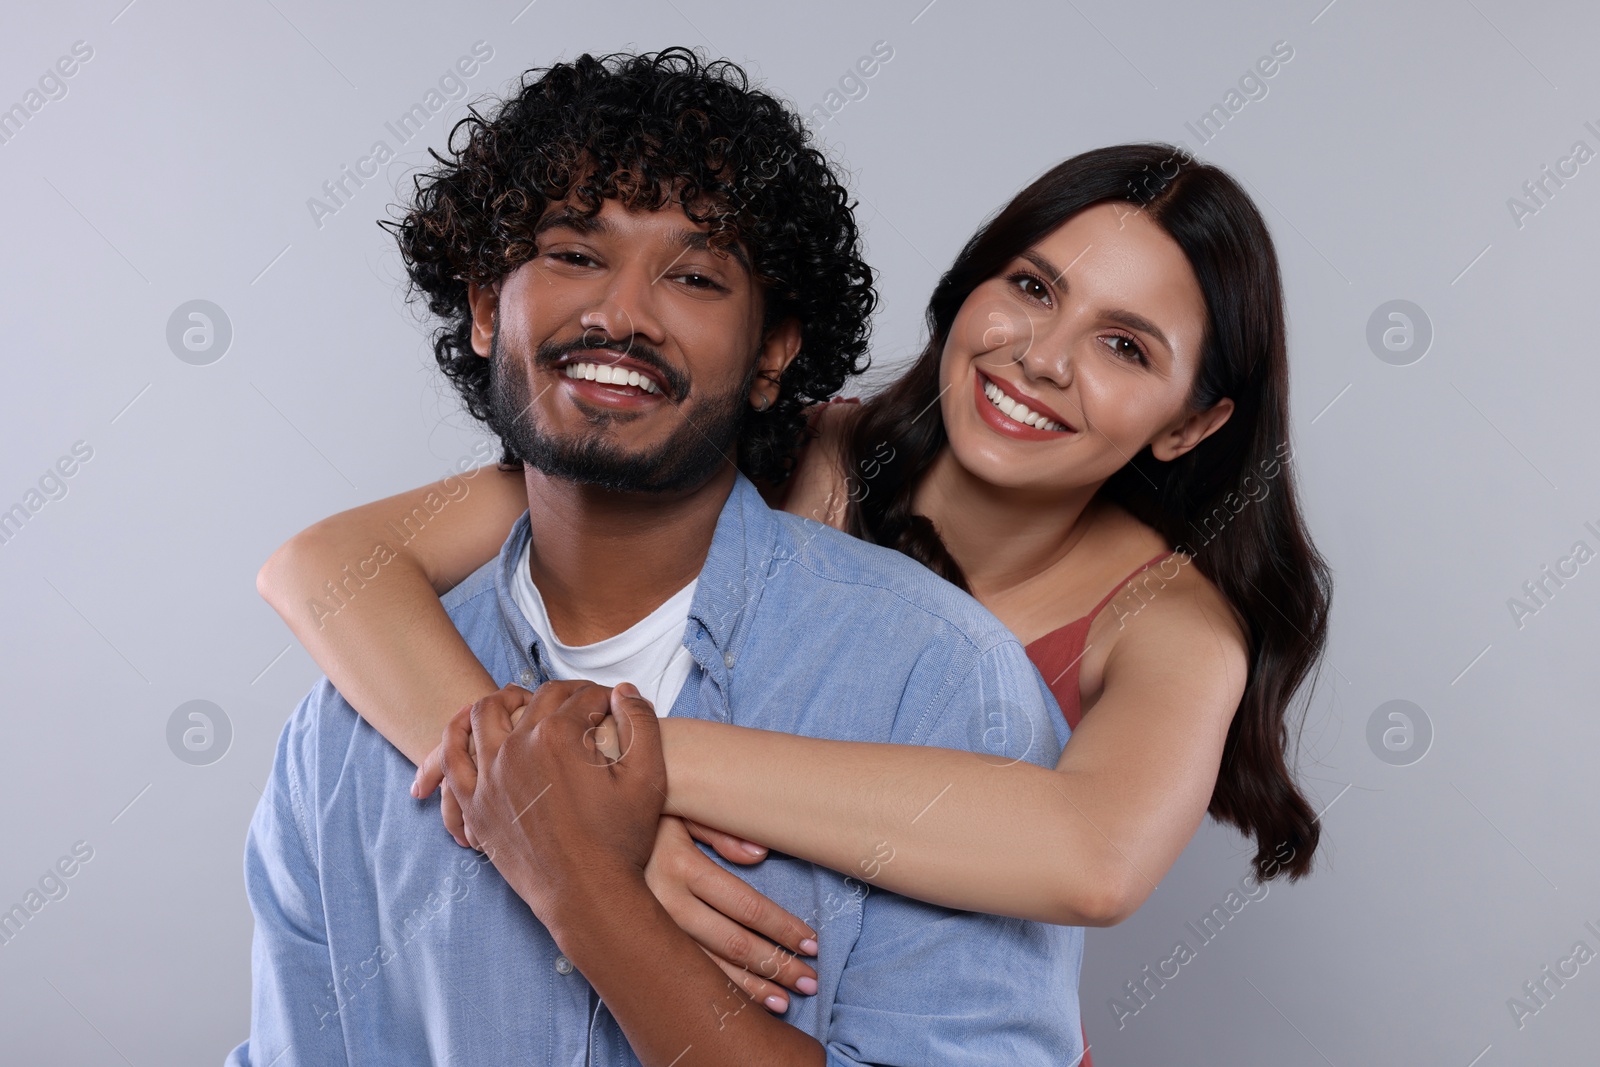 Photo of International dating. Happy couple hugging on light grey background